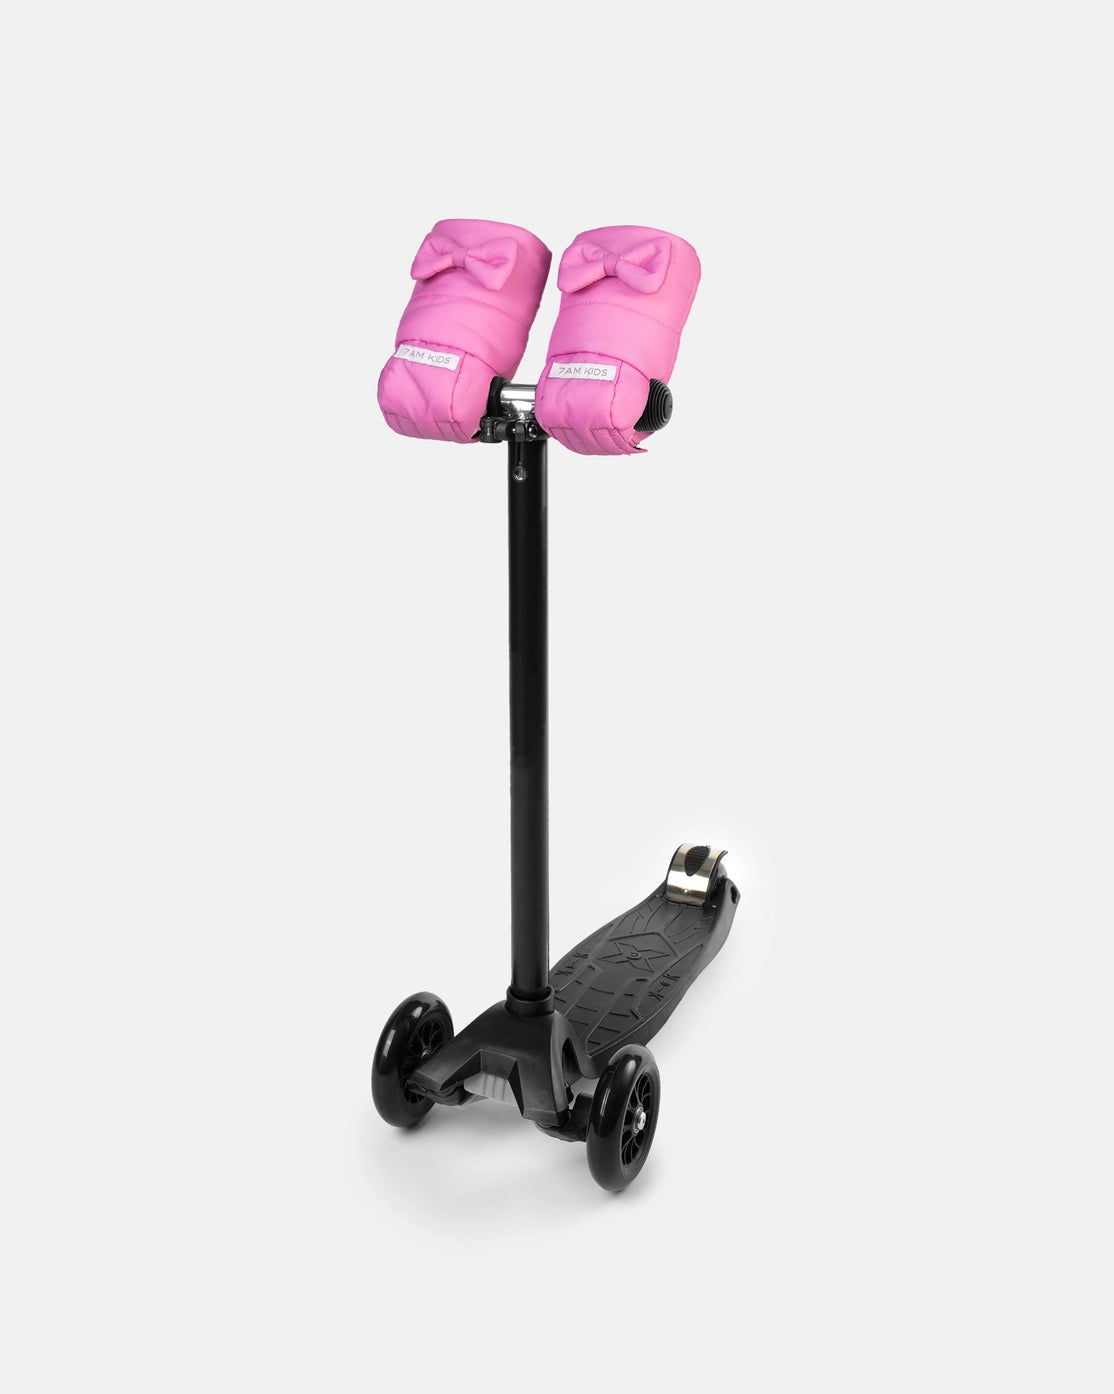 Kids' Scooter Muffs - Pink Bows